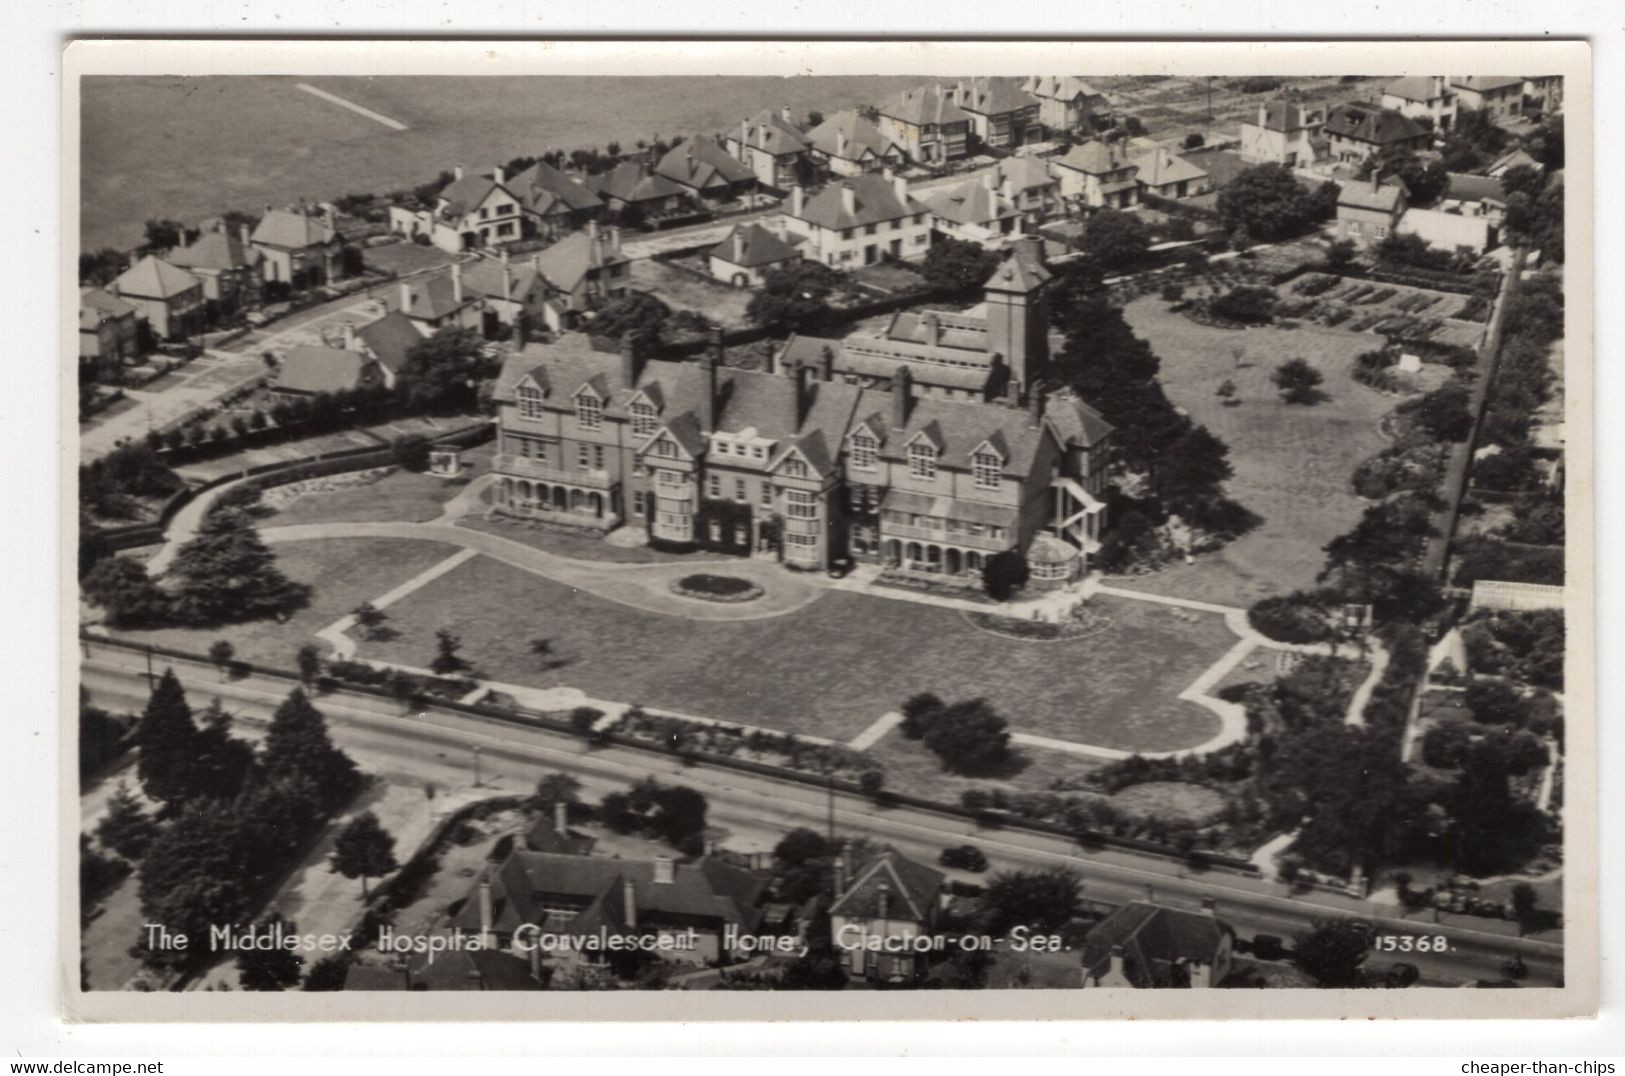 CLACTON-ON-SEA - Middlesex Hospital Convalescent Home - Aero Pictorial 15368 - Clacton On Sea